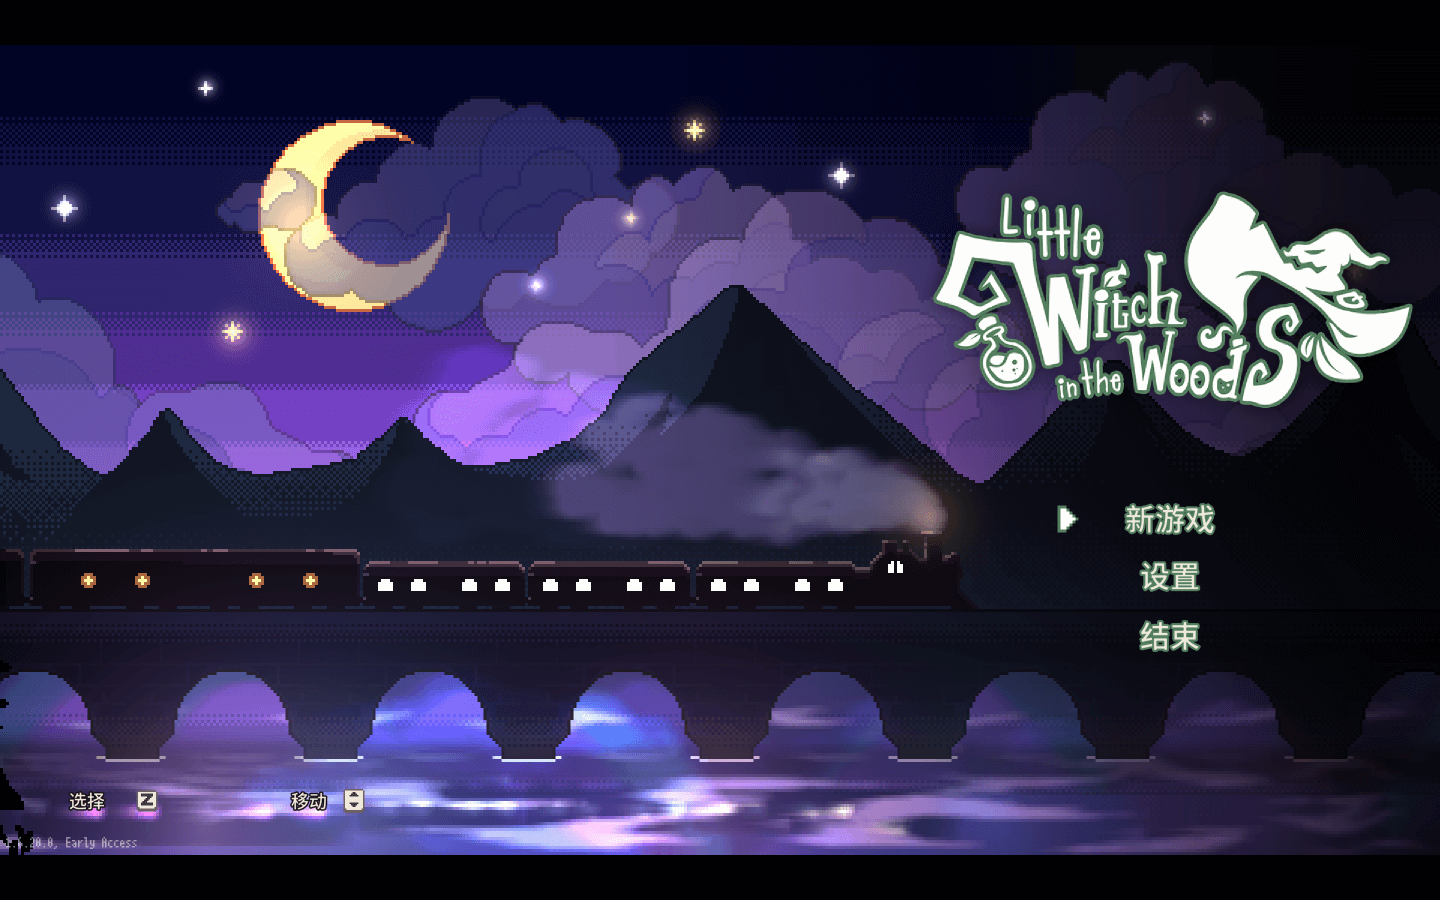 林中小女巫 for Mac v3.5.5.0-b Little Witch in the Woods 中文原生版 苹果电脑